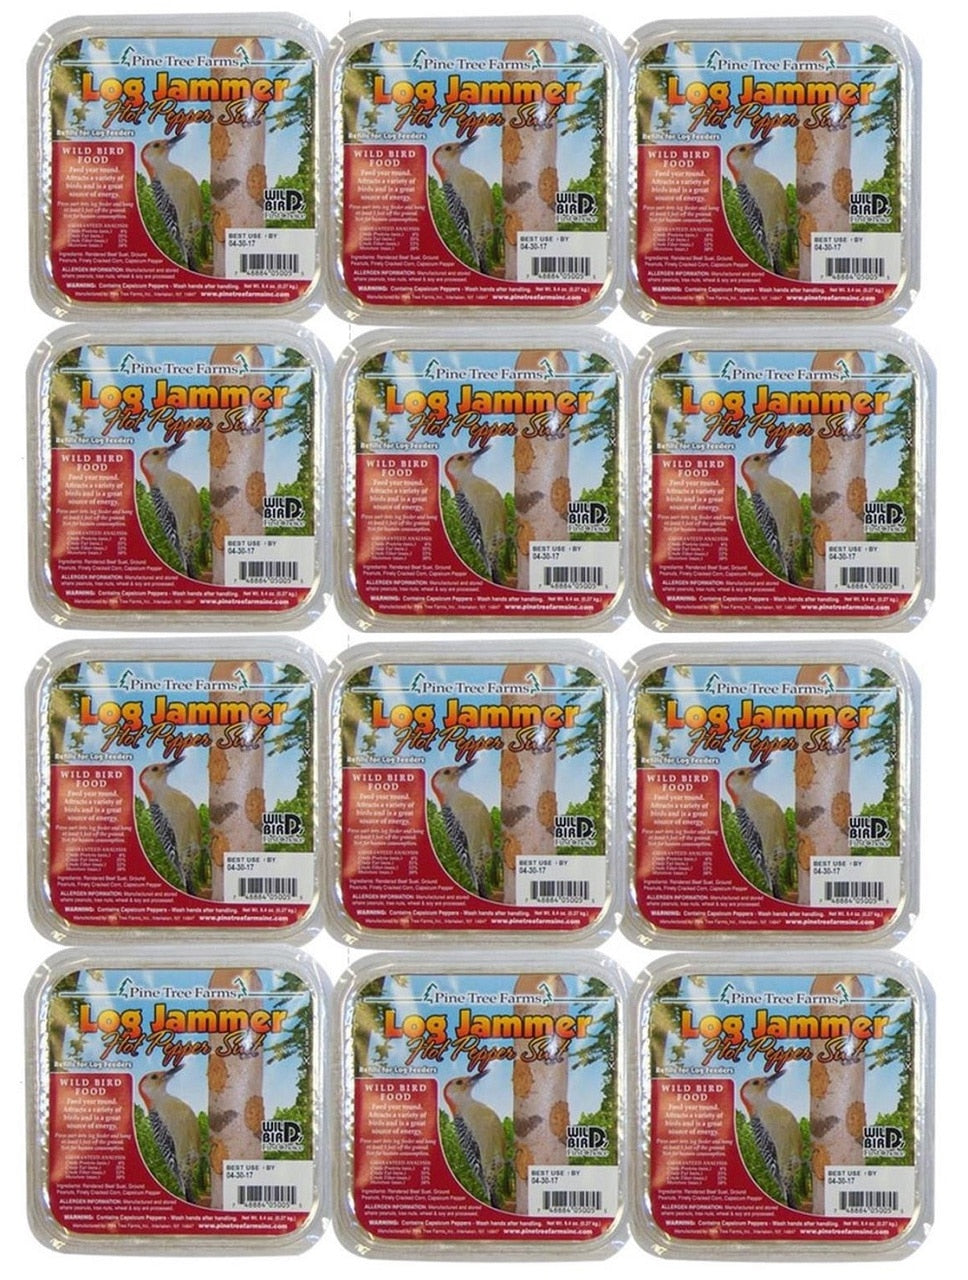 Pine Tree Farms Log Jammer Hot Pepper Suet 3 Plugs Per Pack (6 or 12 Packs) - JCS Wildlife